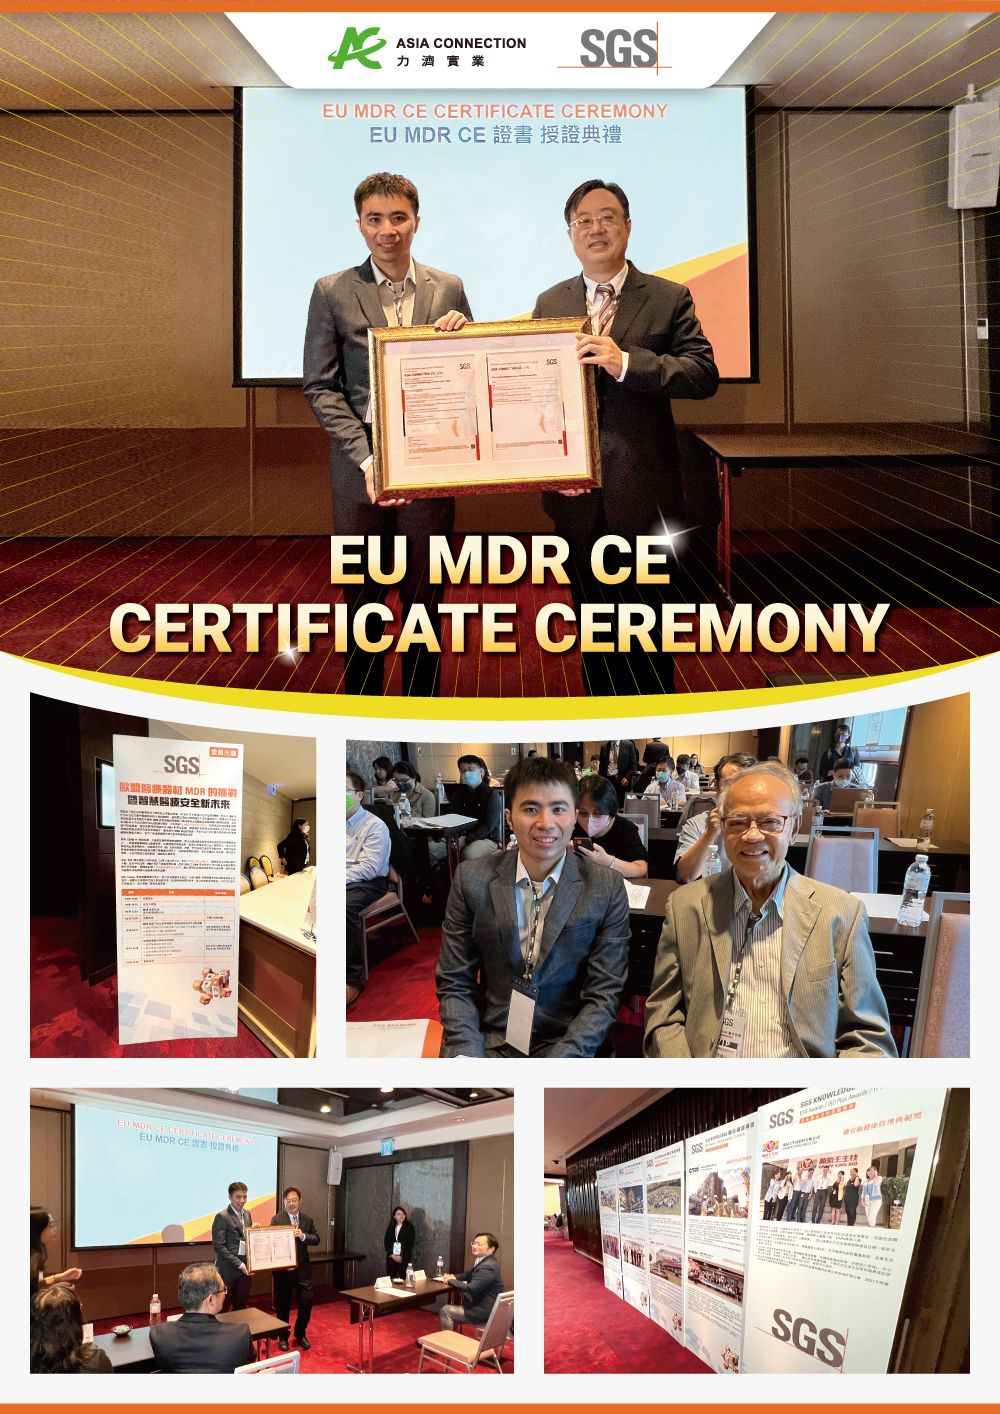 Asia Connection's ME8202X- Betriebenes Nasensauger erreicht CE-Zertifizierung gemäß der EU-Medizinprodukteverordnung (MDR) 2017/745